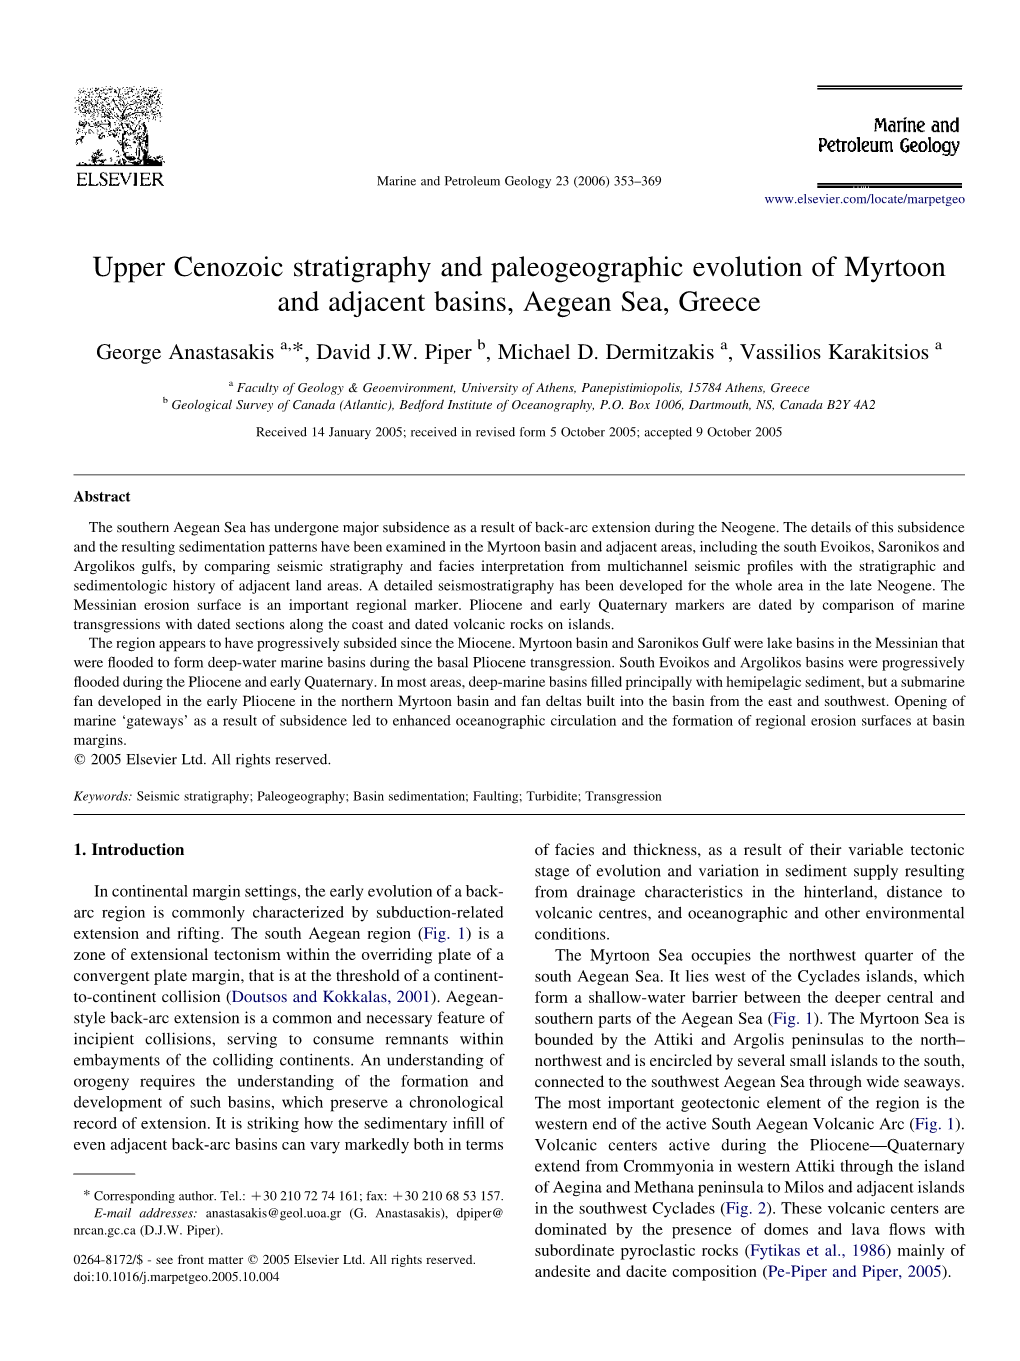 Upper Cenozoic Stratigraphy and Paleogeographic Evolution of Myrtoon and Adjacent Basins, Aegean Sea, Greece